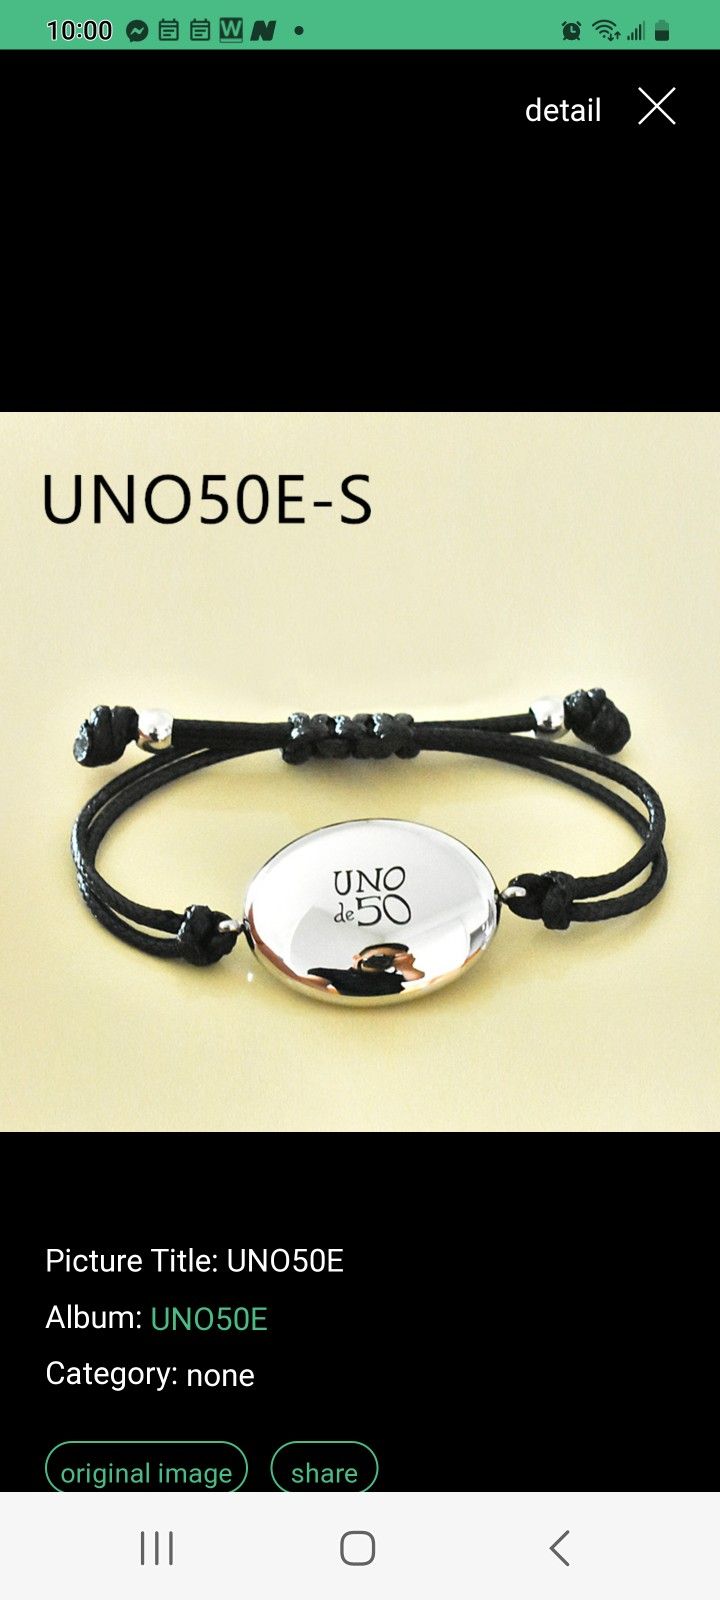 Uno De 50 Adjustable Bracelet